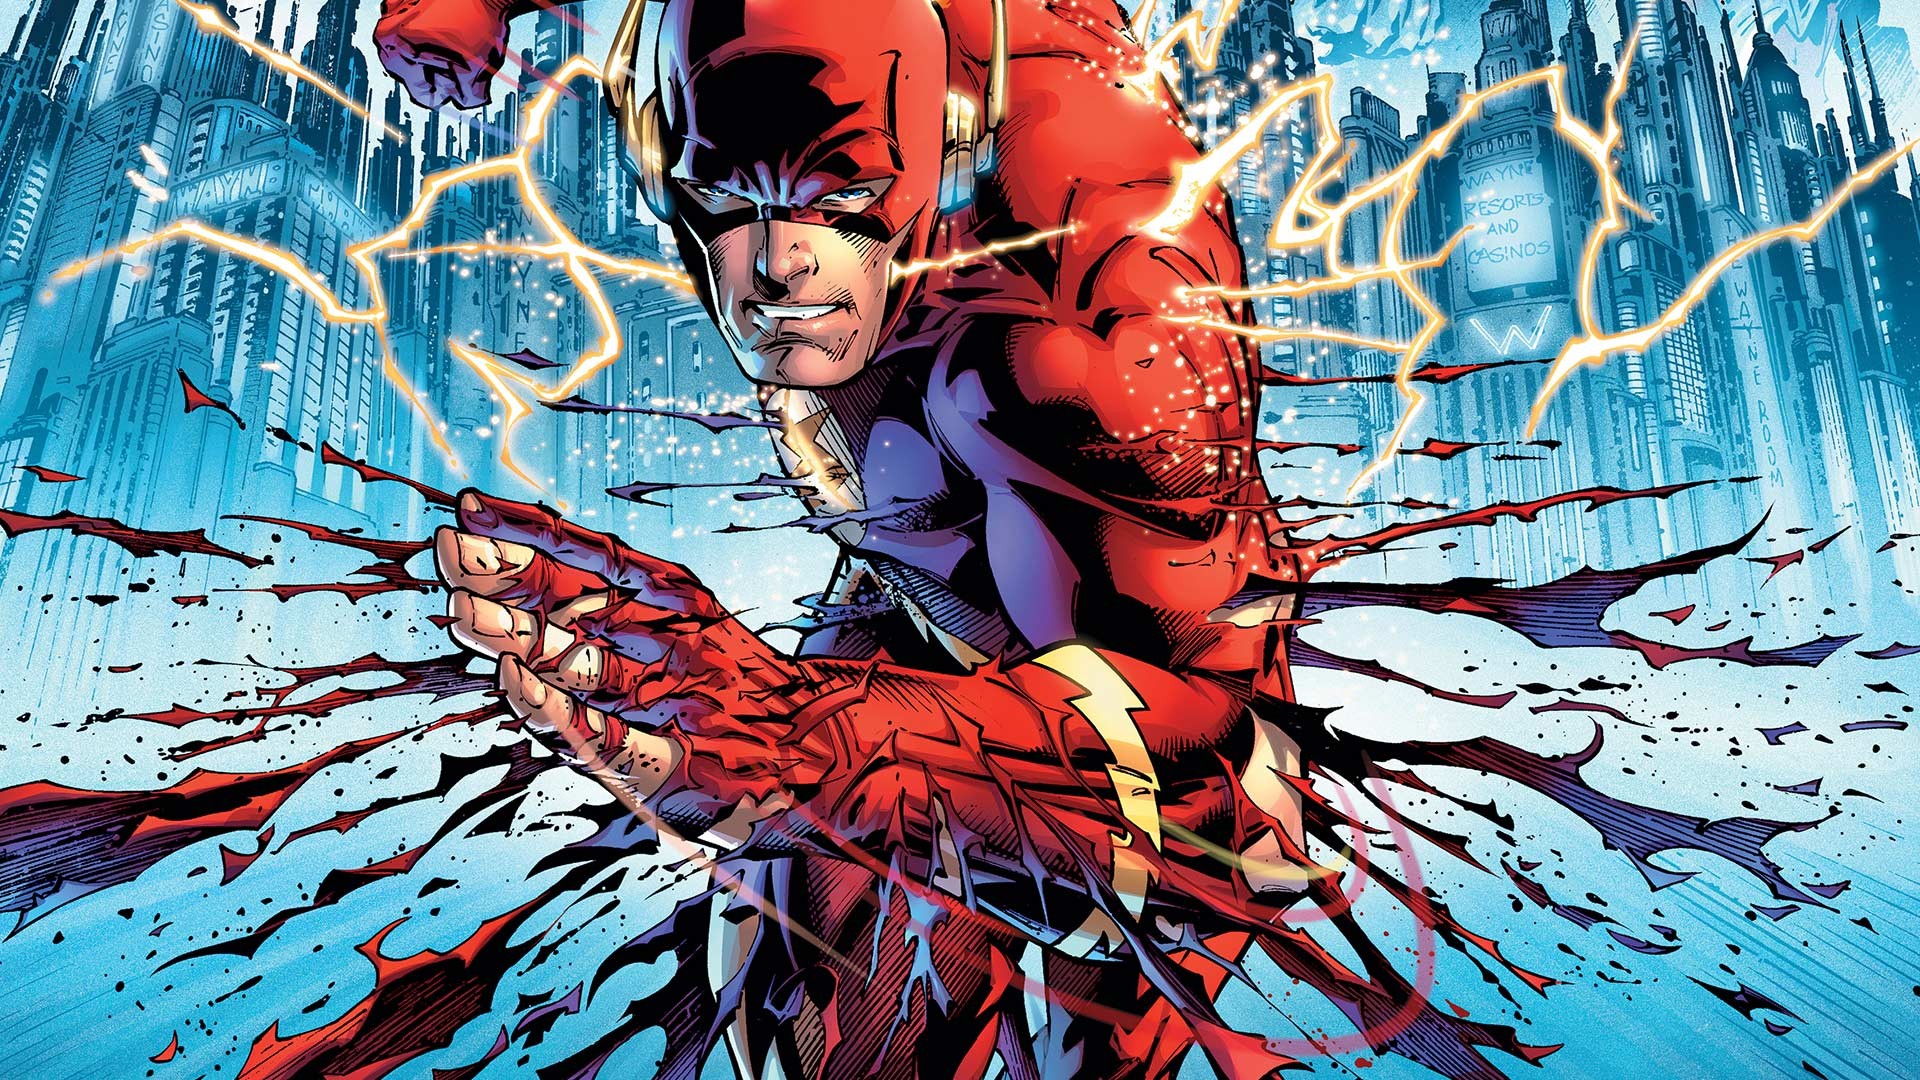 General 1920x1080 superhero comics lightning artwork The Flash bodysuit running